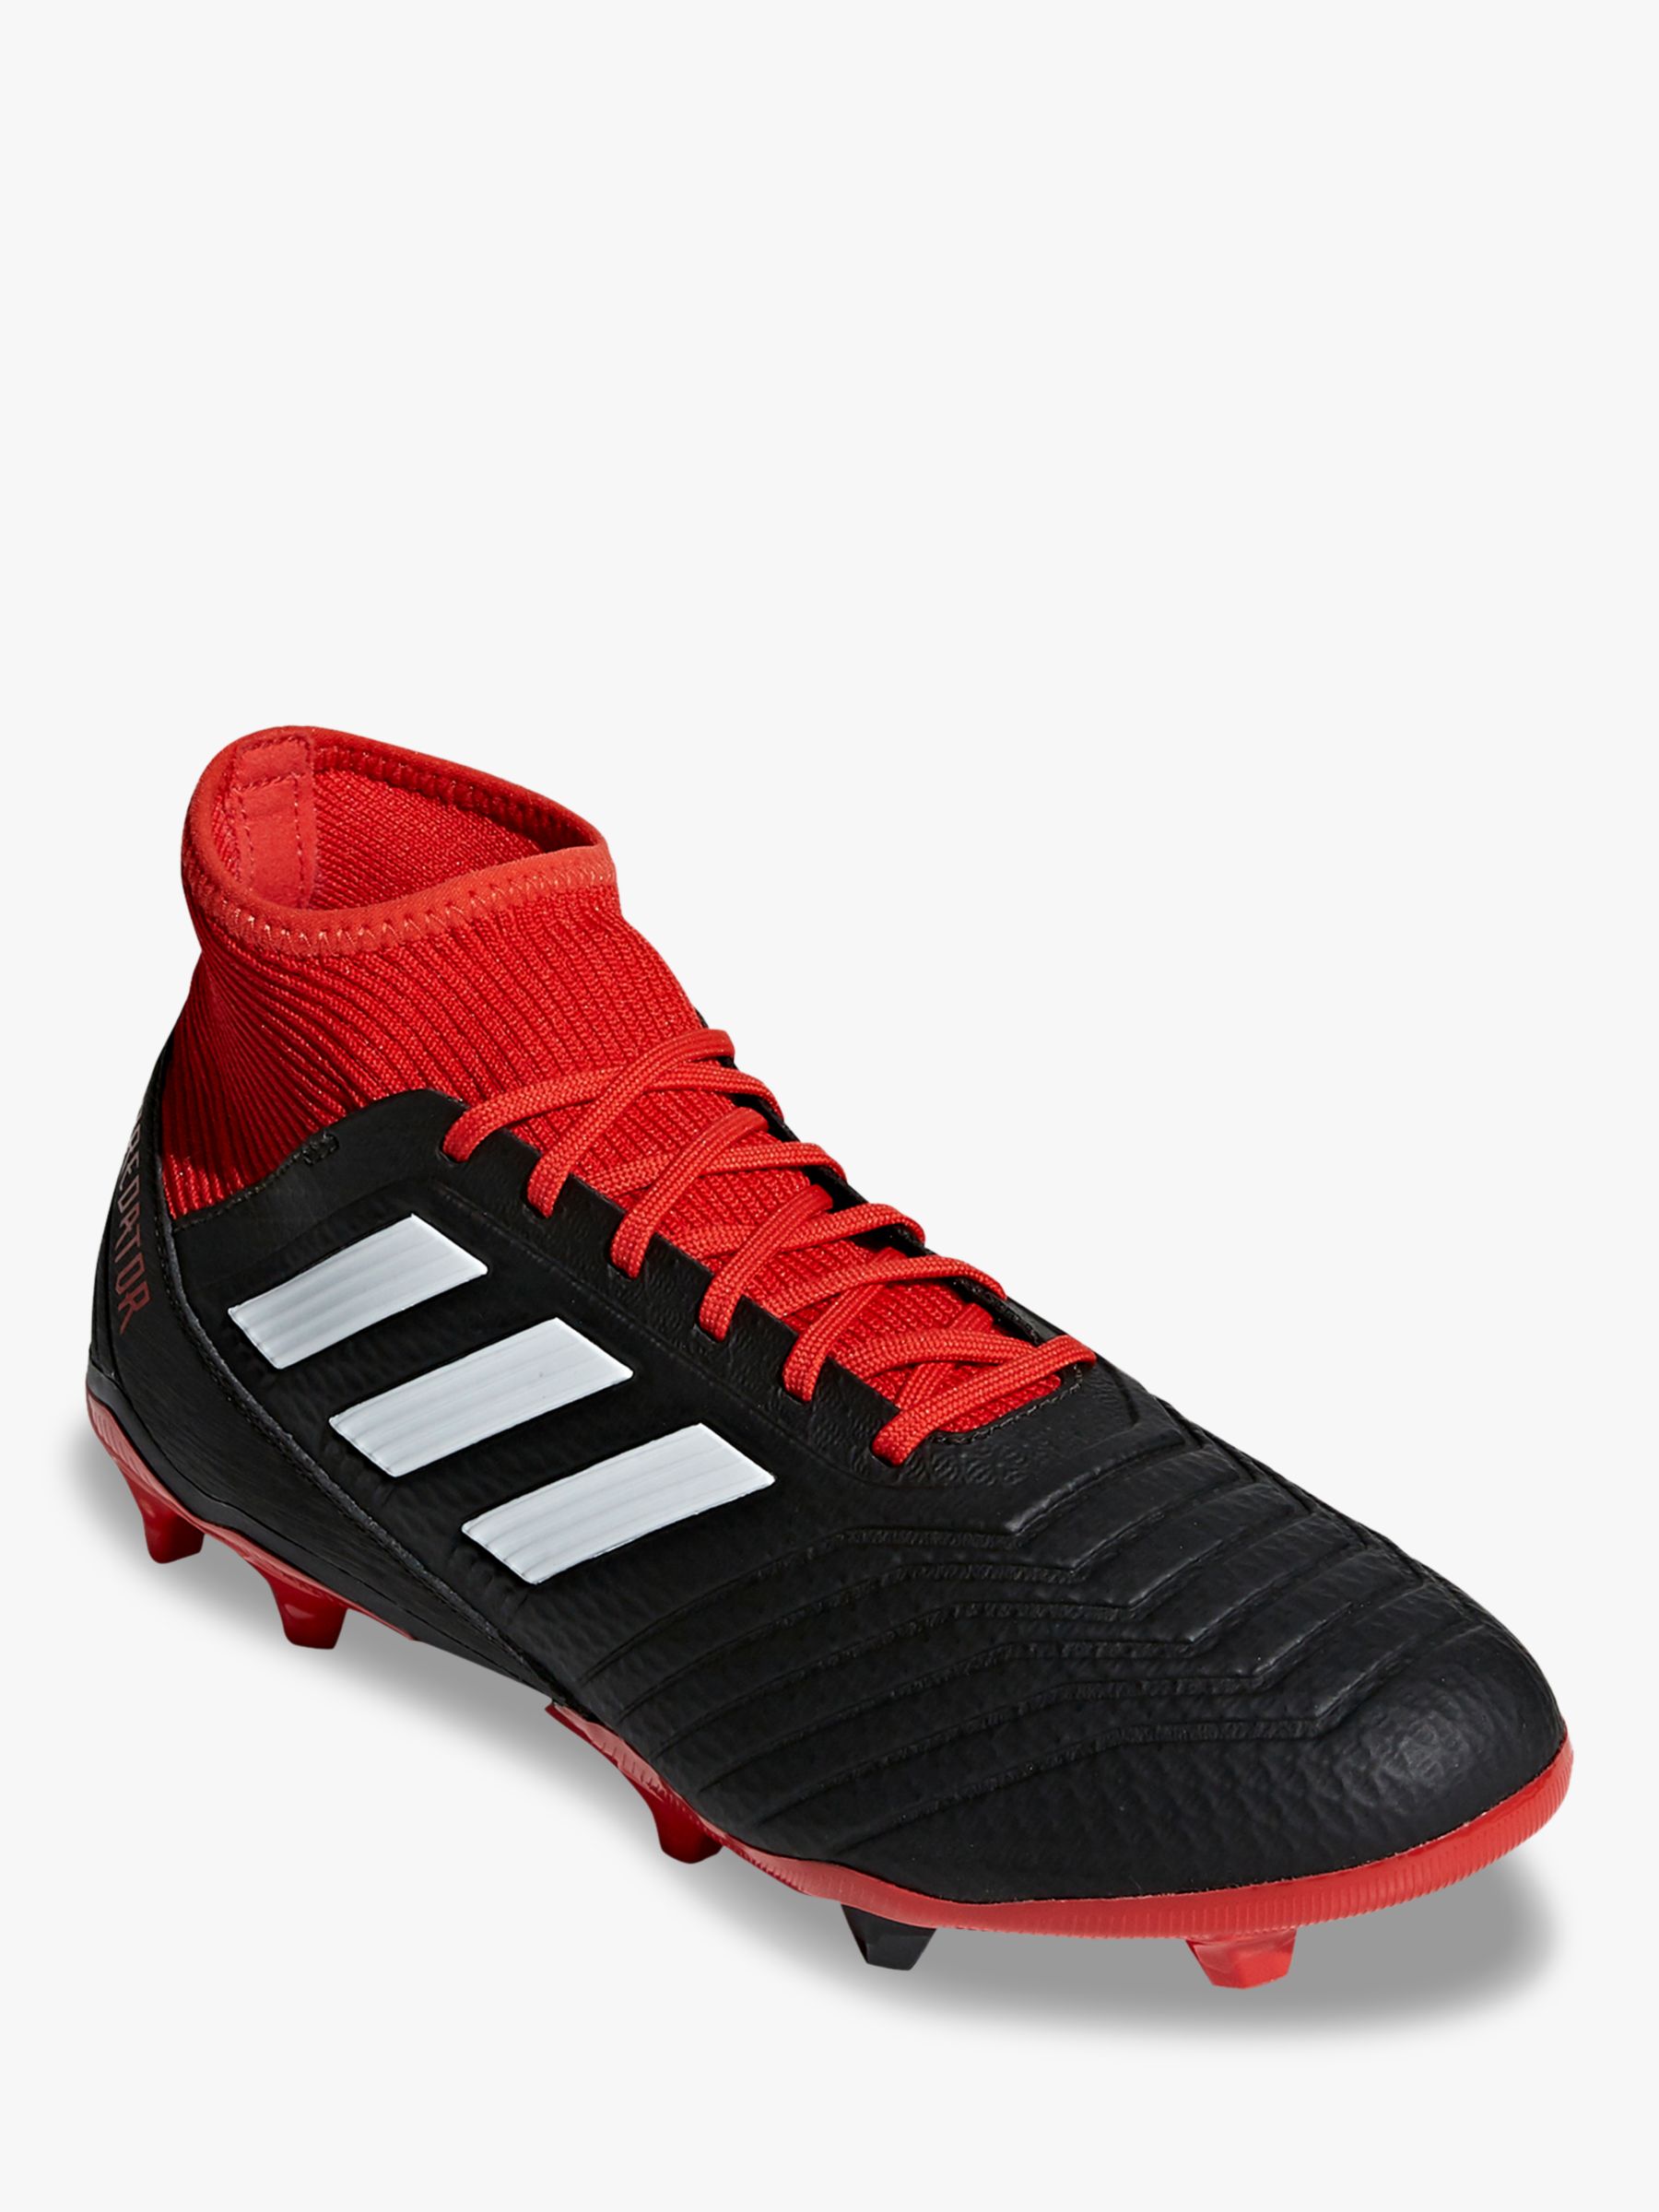 predator football boots red